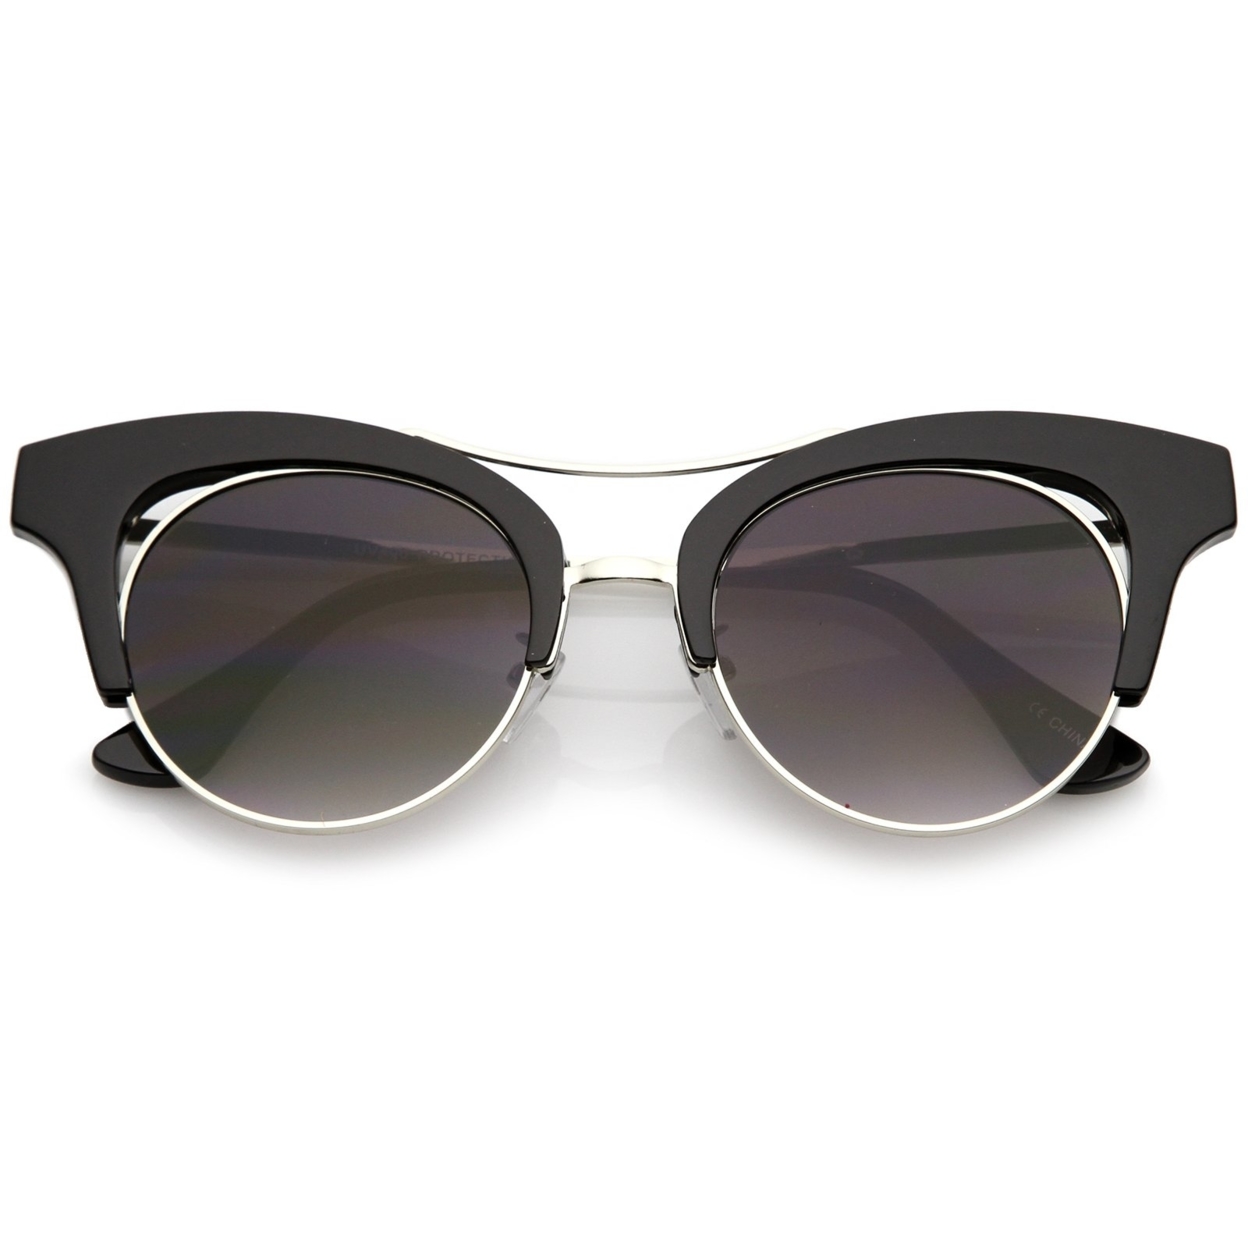 Women's Oversize Cutout Metal Brow Bar Round Flat Lens Cat Eye Sunglasses 51mm - White-Gold / Lavender